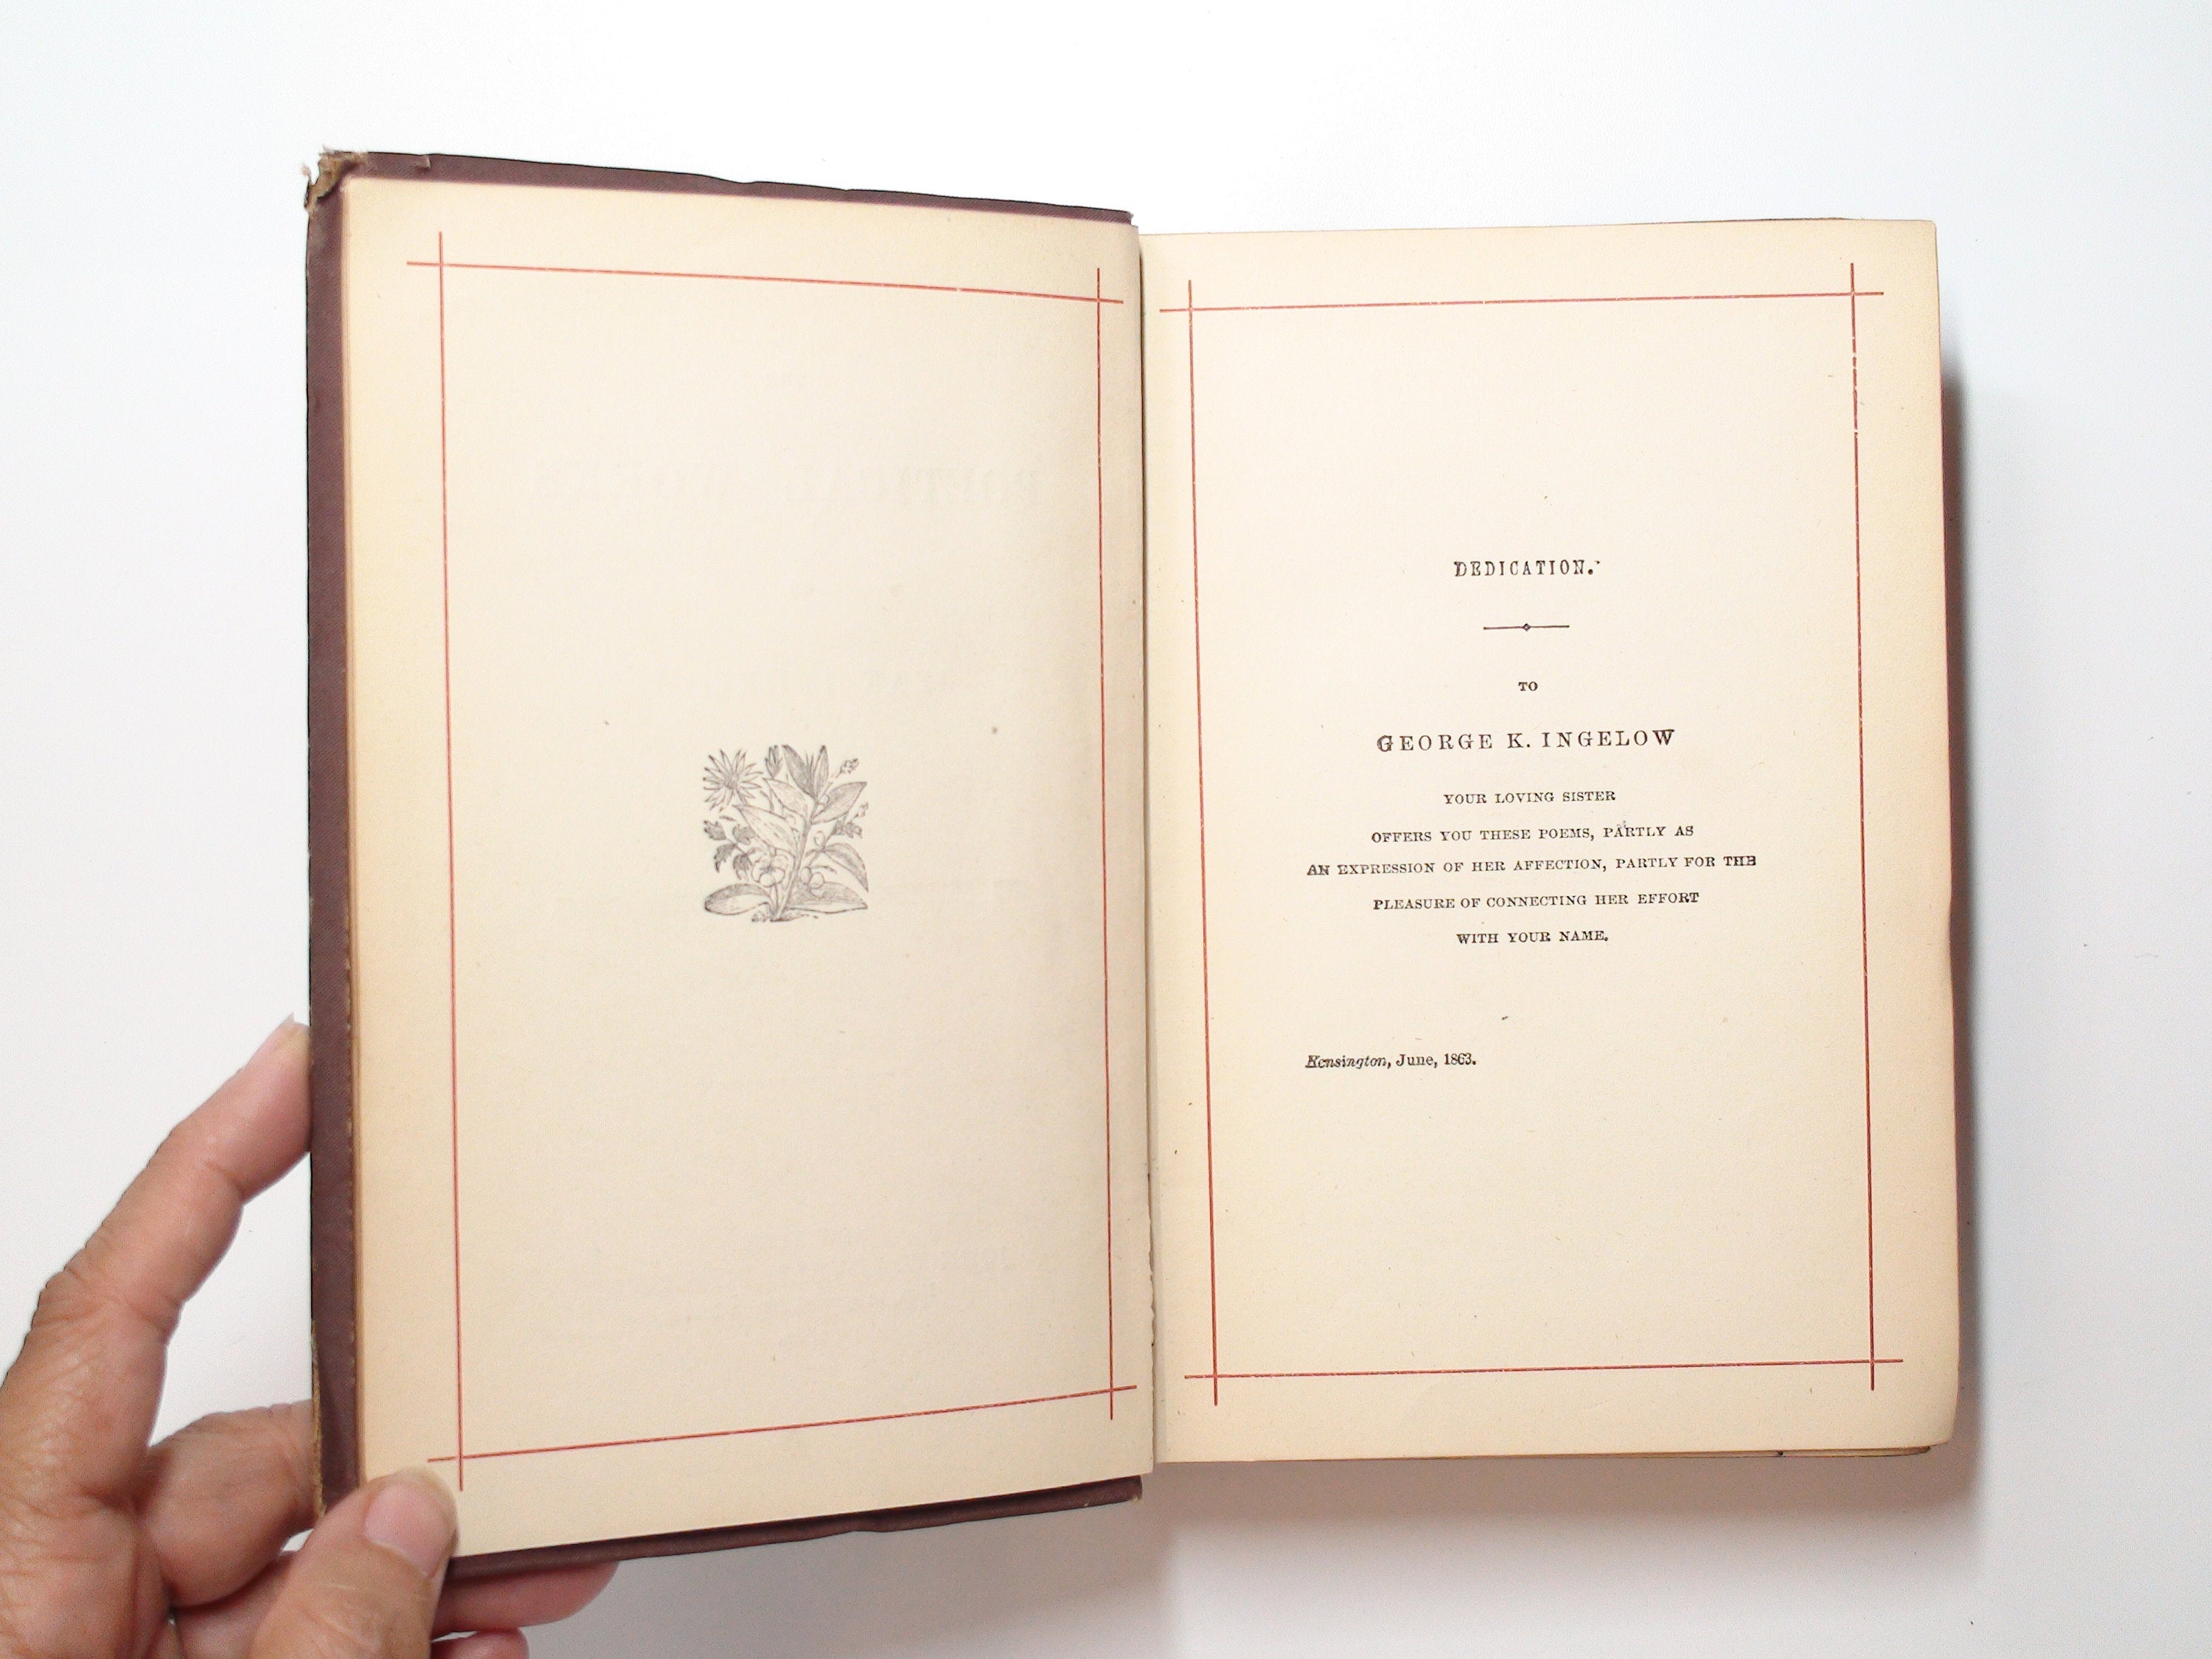 The Poetical Works of Jean Ingelow, Illustrated, Victorian Binding, 1881